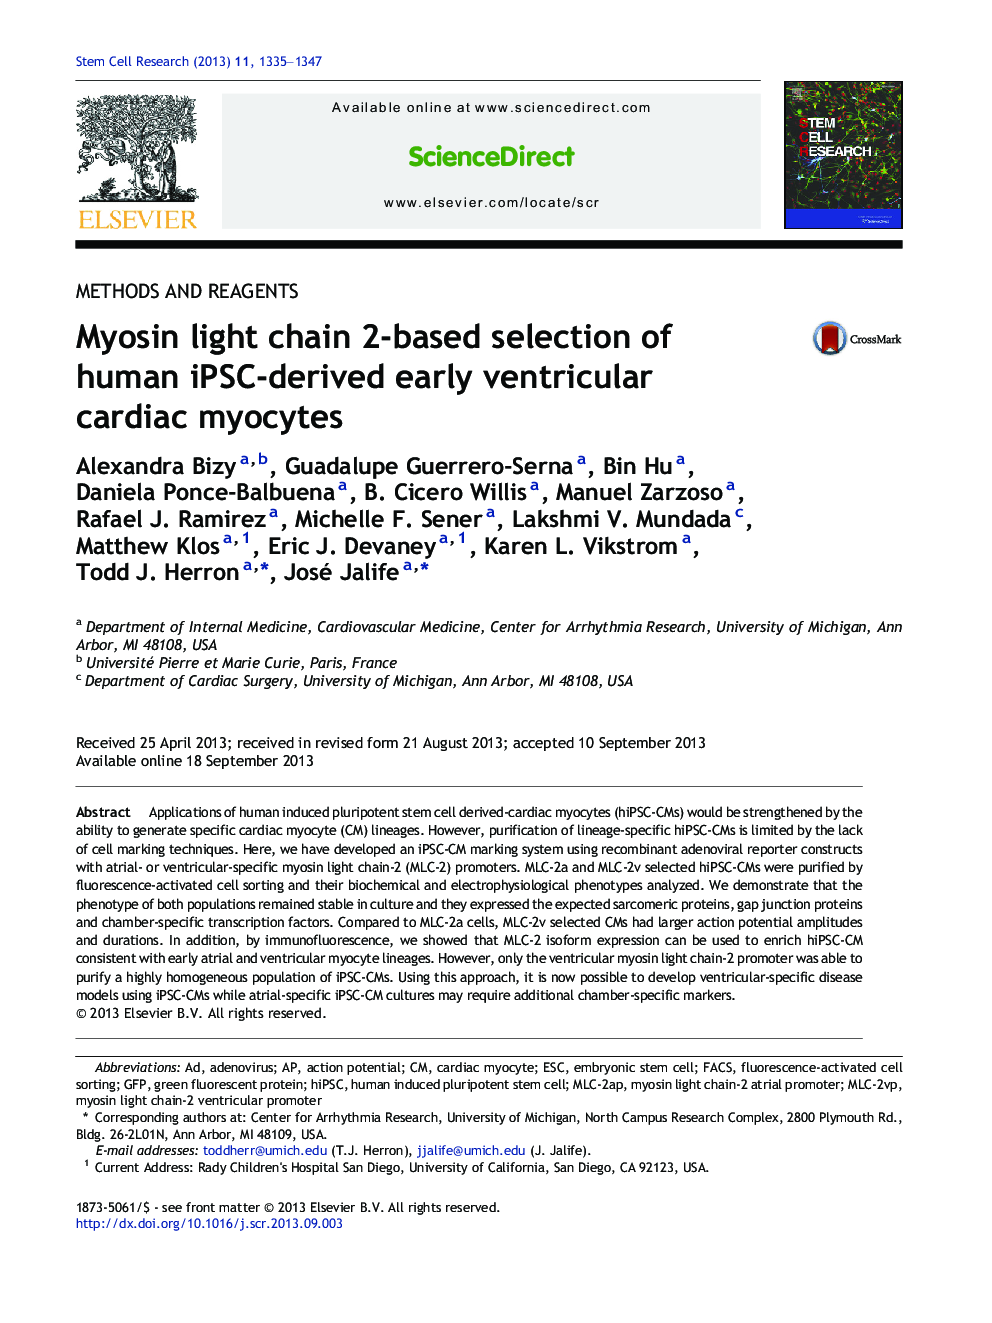 Myosin light chain 2-based selection of human iPSC-derived early ventricular cardiac myocytes